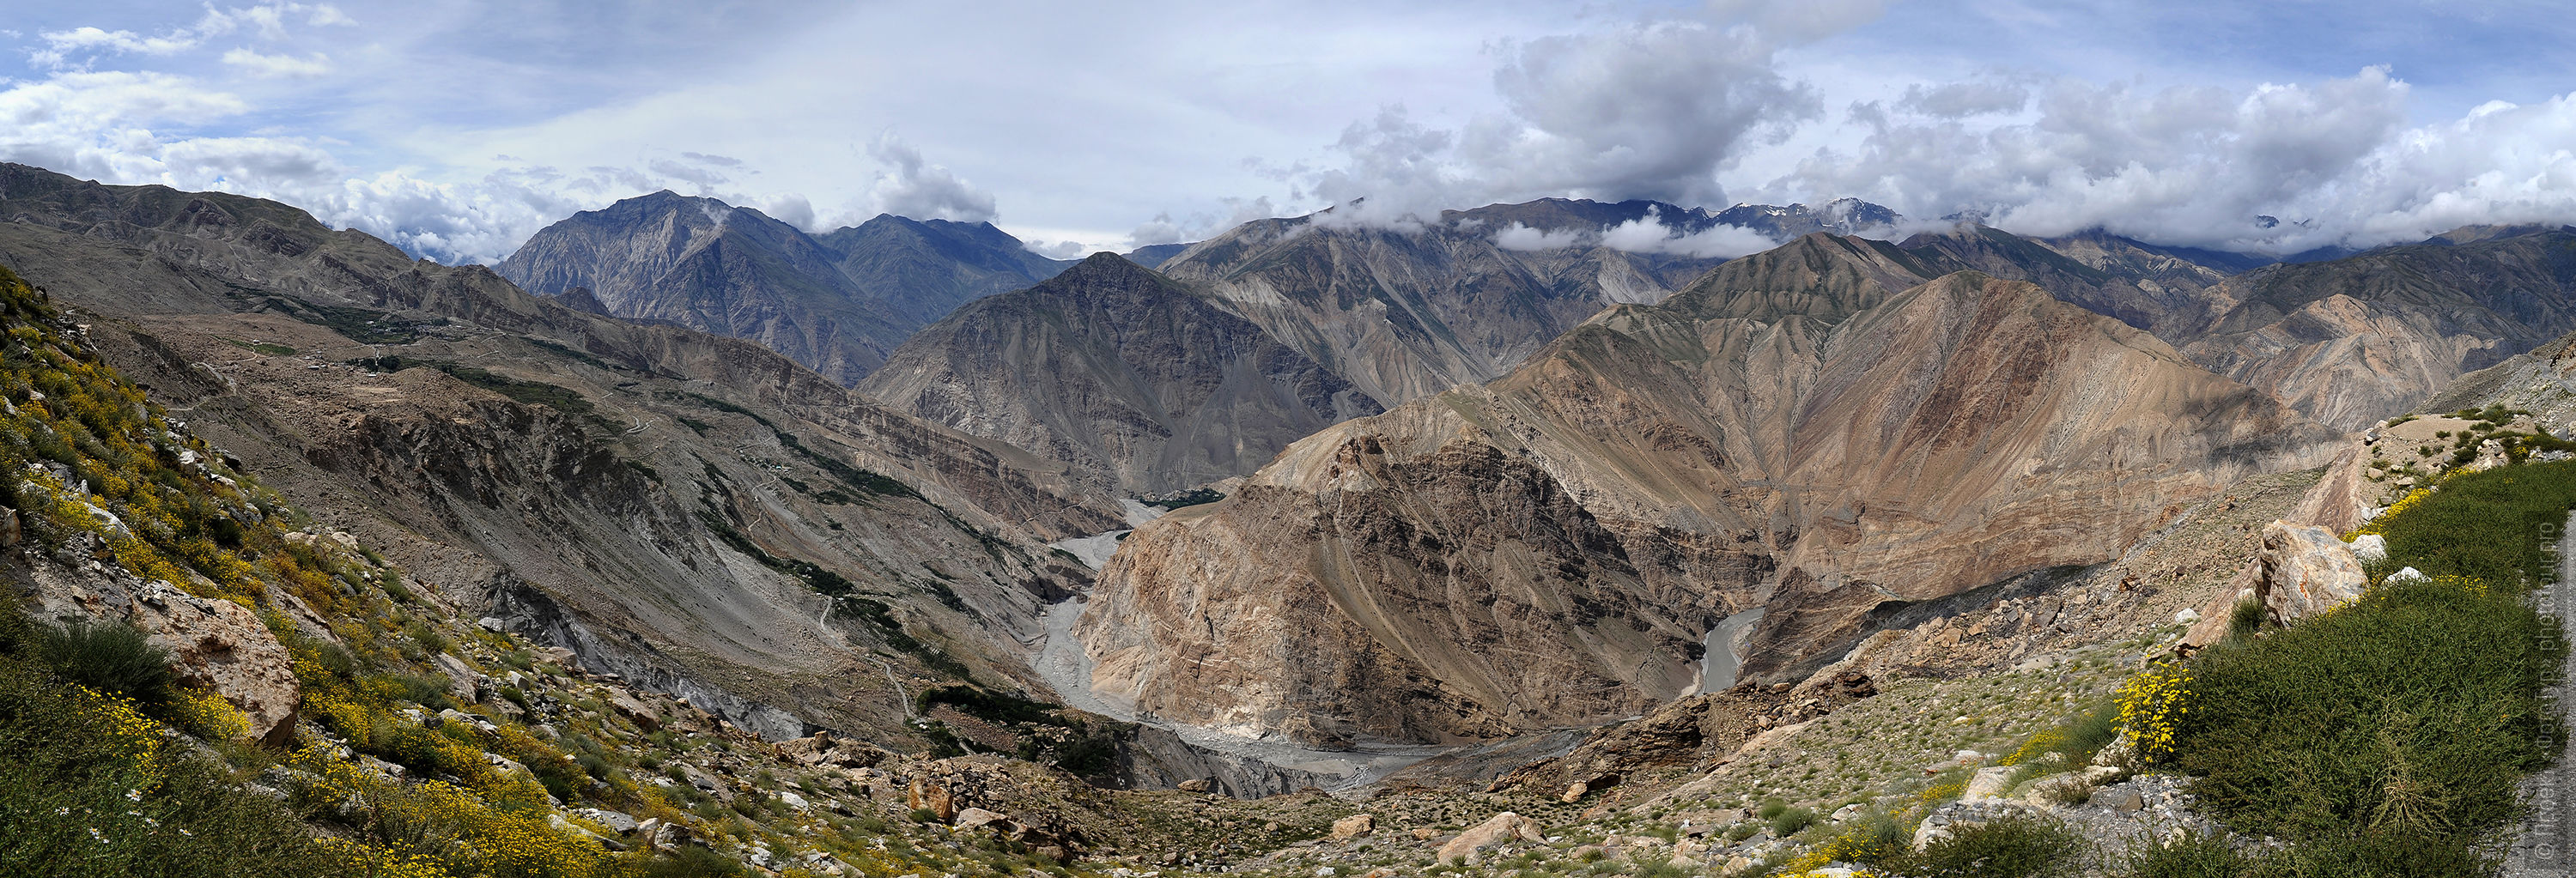 Дорога Нако - Табо, долина Спити, Малый Тибет. Тур в долину Спити, Индия, 2017 год.